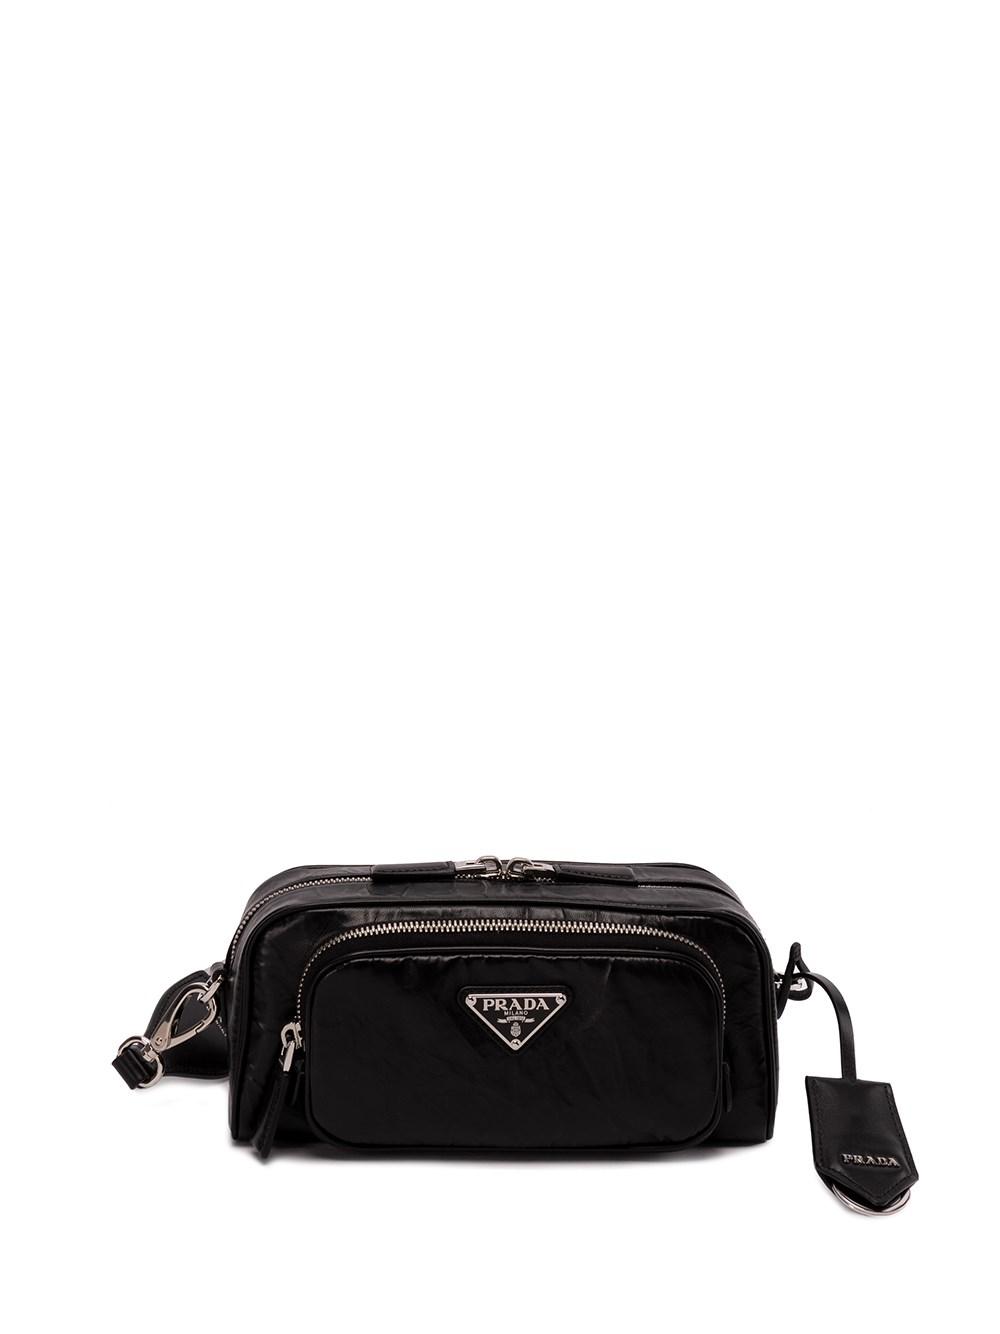 Prada Distressed Leather Shoulder Bag in Black | Lyst